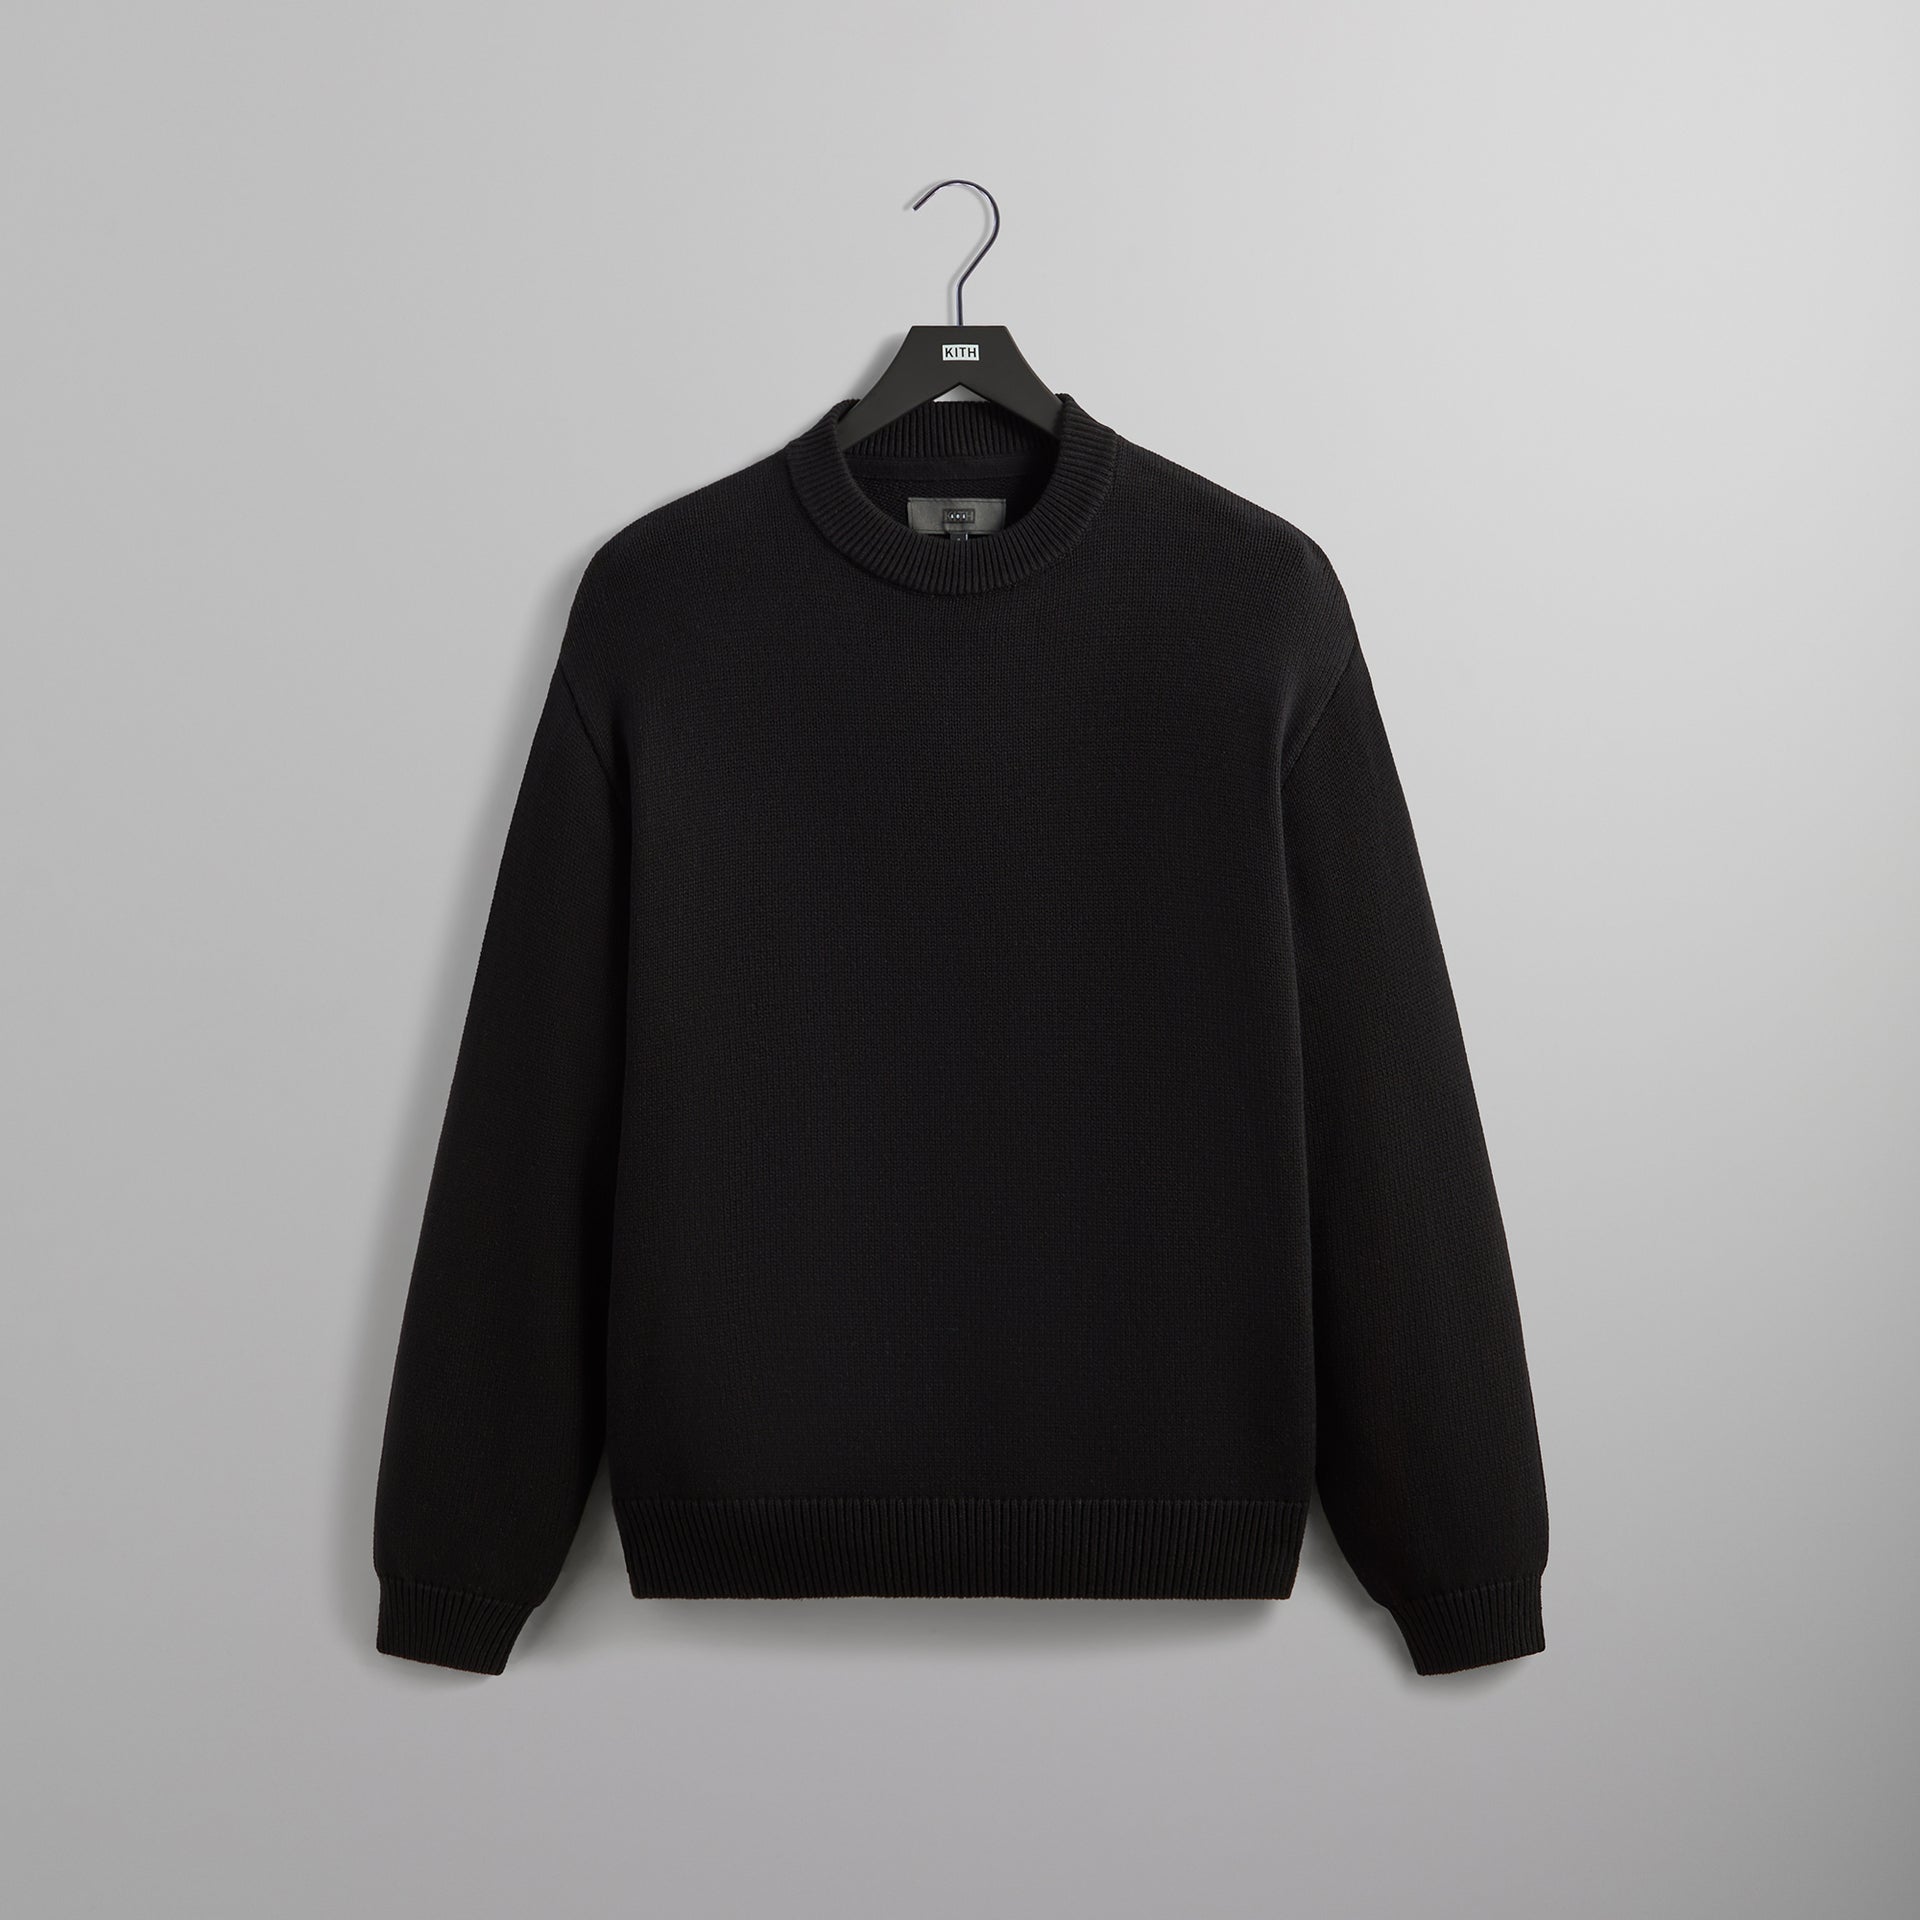 UrlfreezeShops 101 Lewis Windproof Sweater - Black